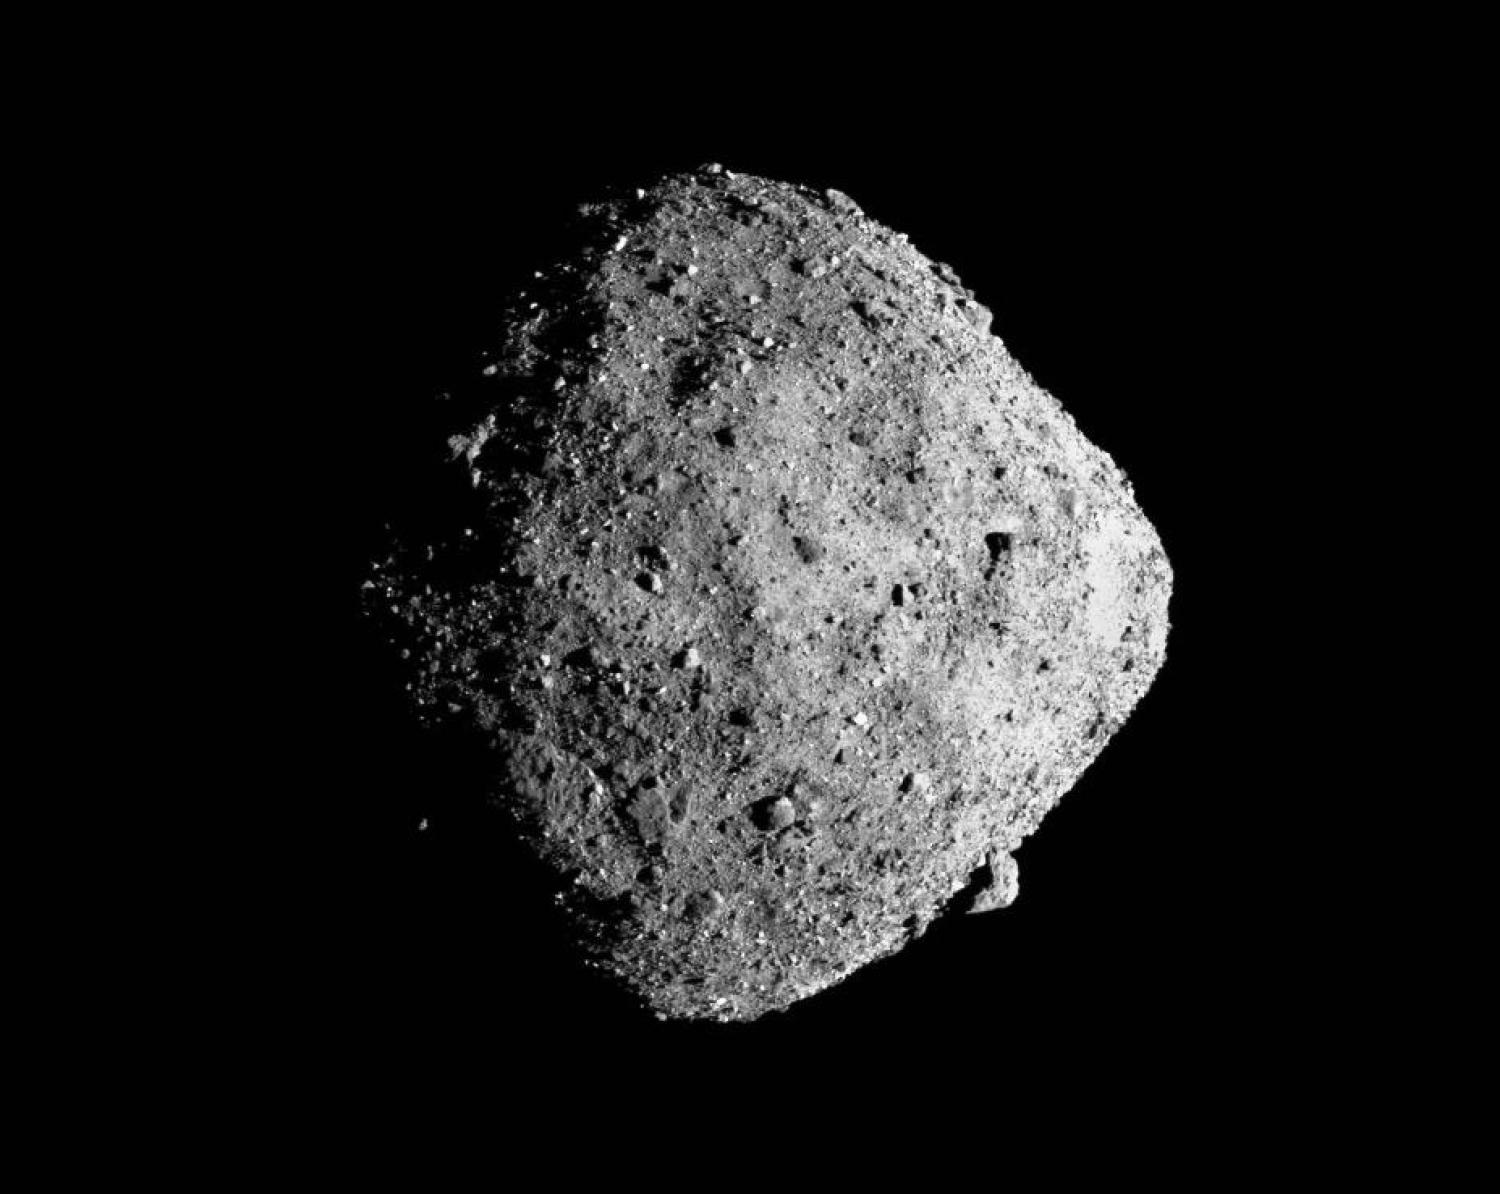 scientists finetune asteroid bennu earth